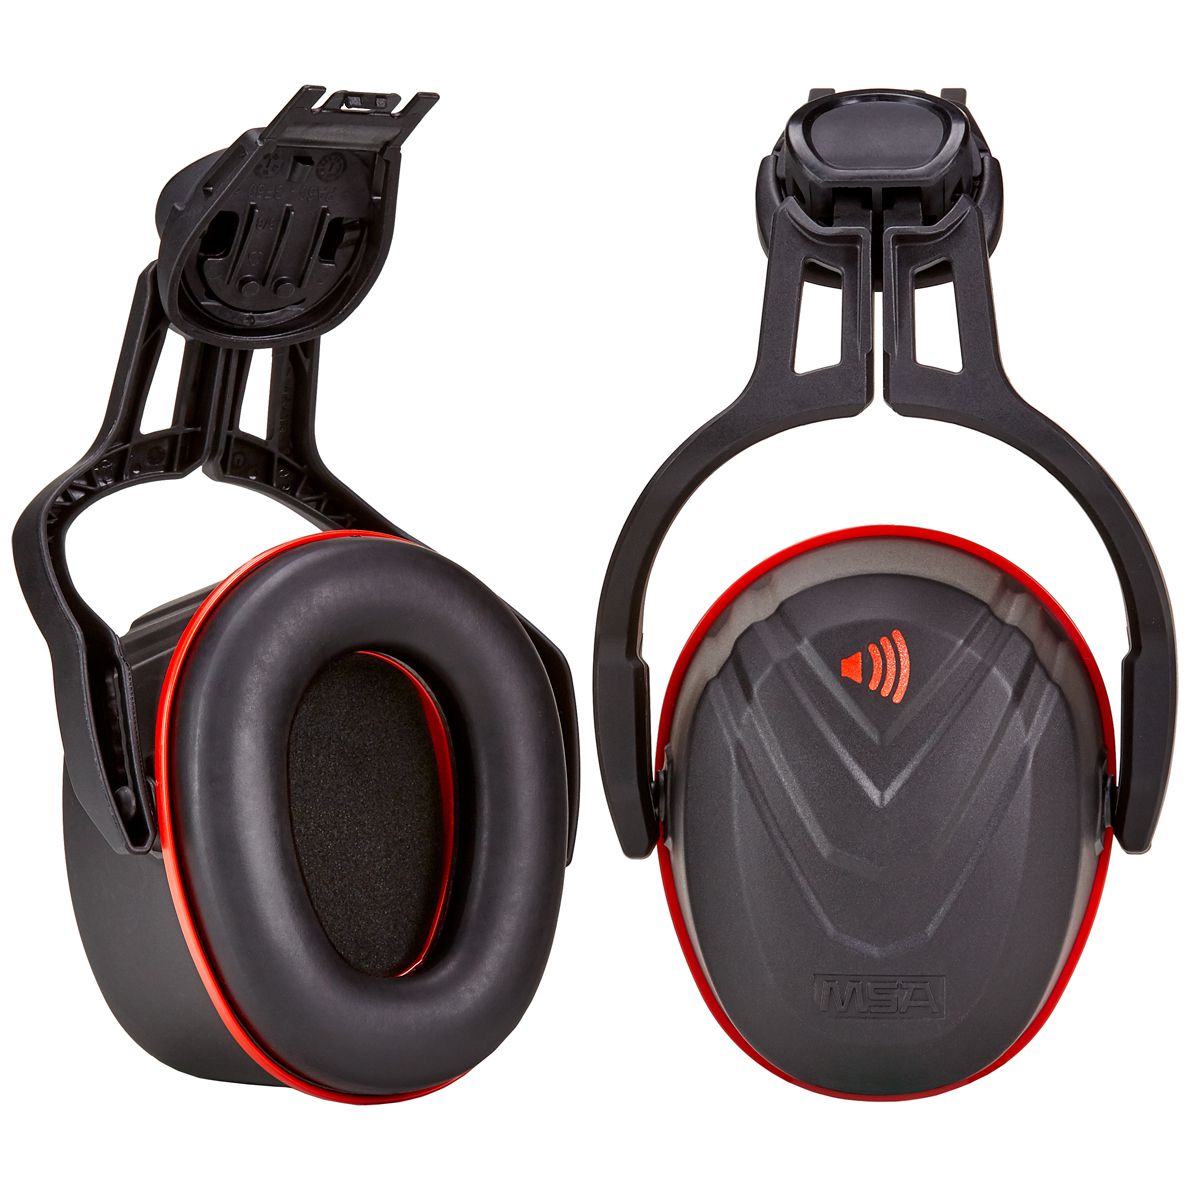 MSA V-Gard Helmet Muff Hearing Protection - Hearing protection capsules with holder for helmet mounting - Black/Red - SNR: 36 dB